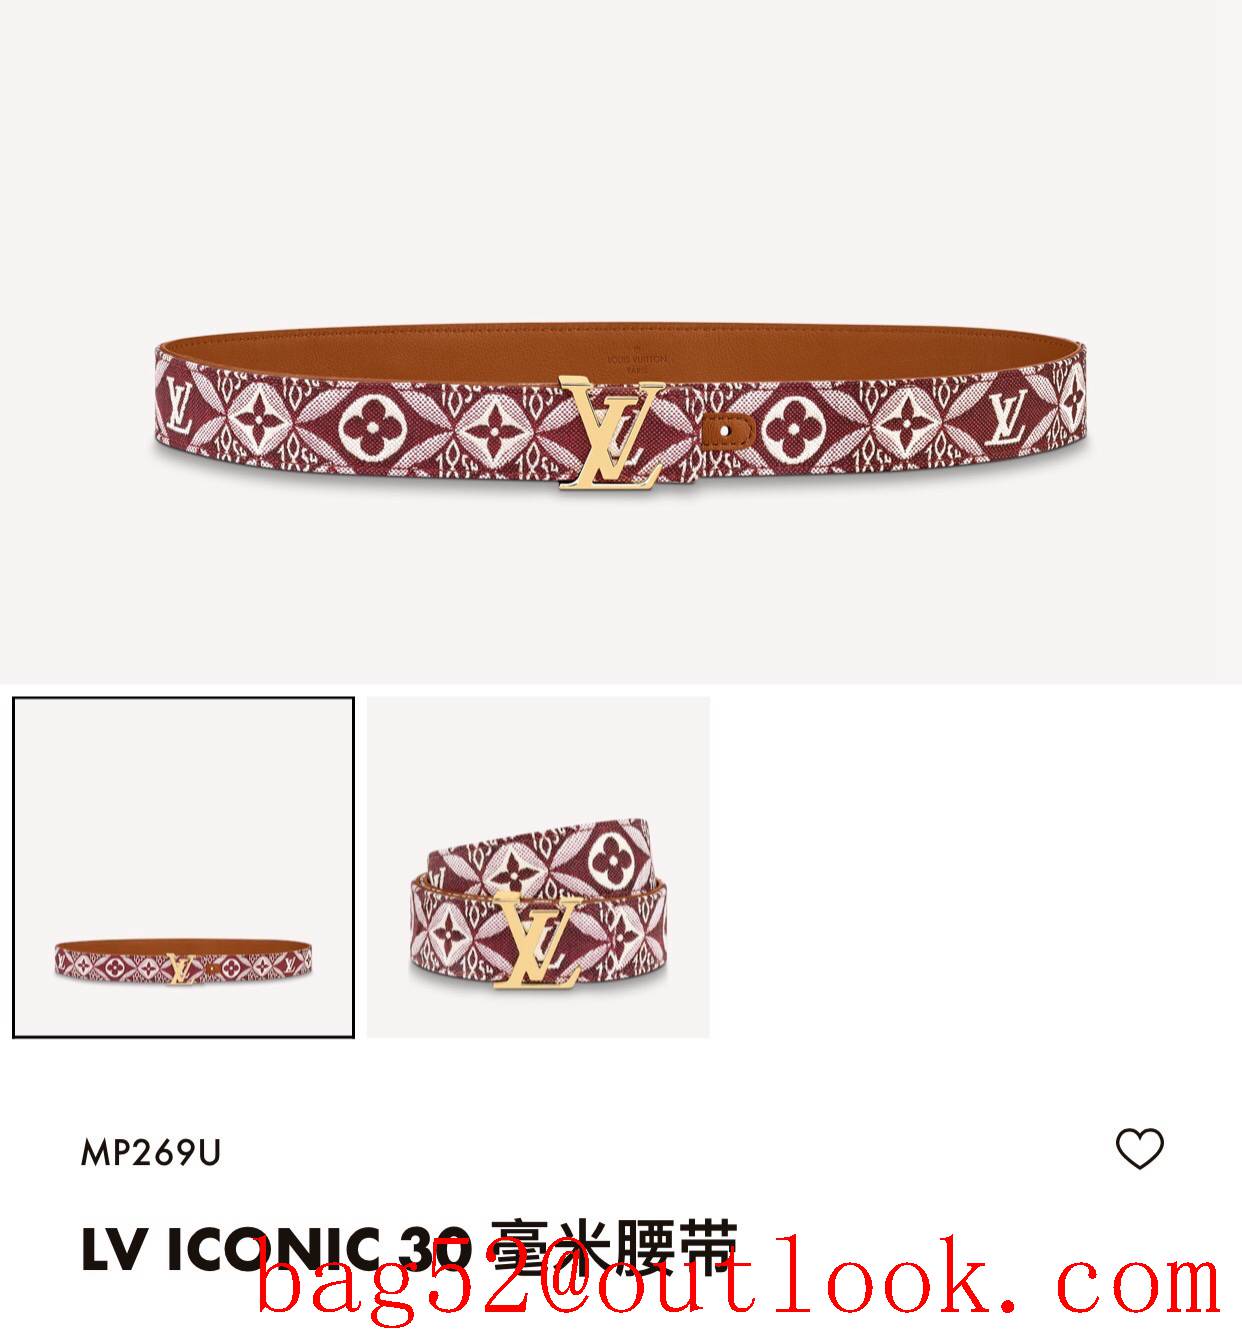 lv Louis Vuitton 30mm flower leather initiales buckle reversible belt 4 colors